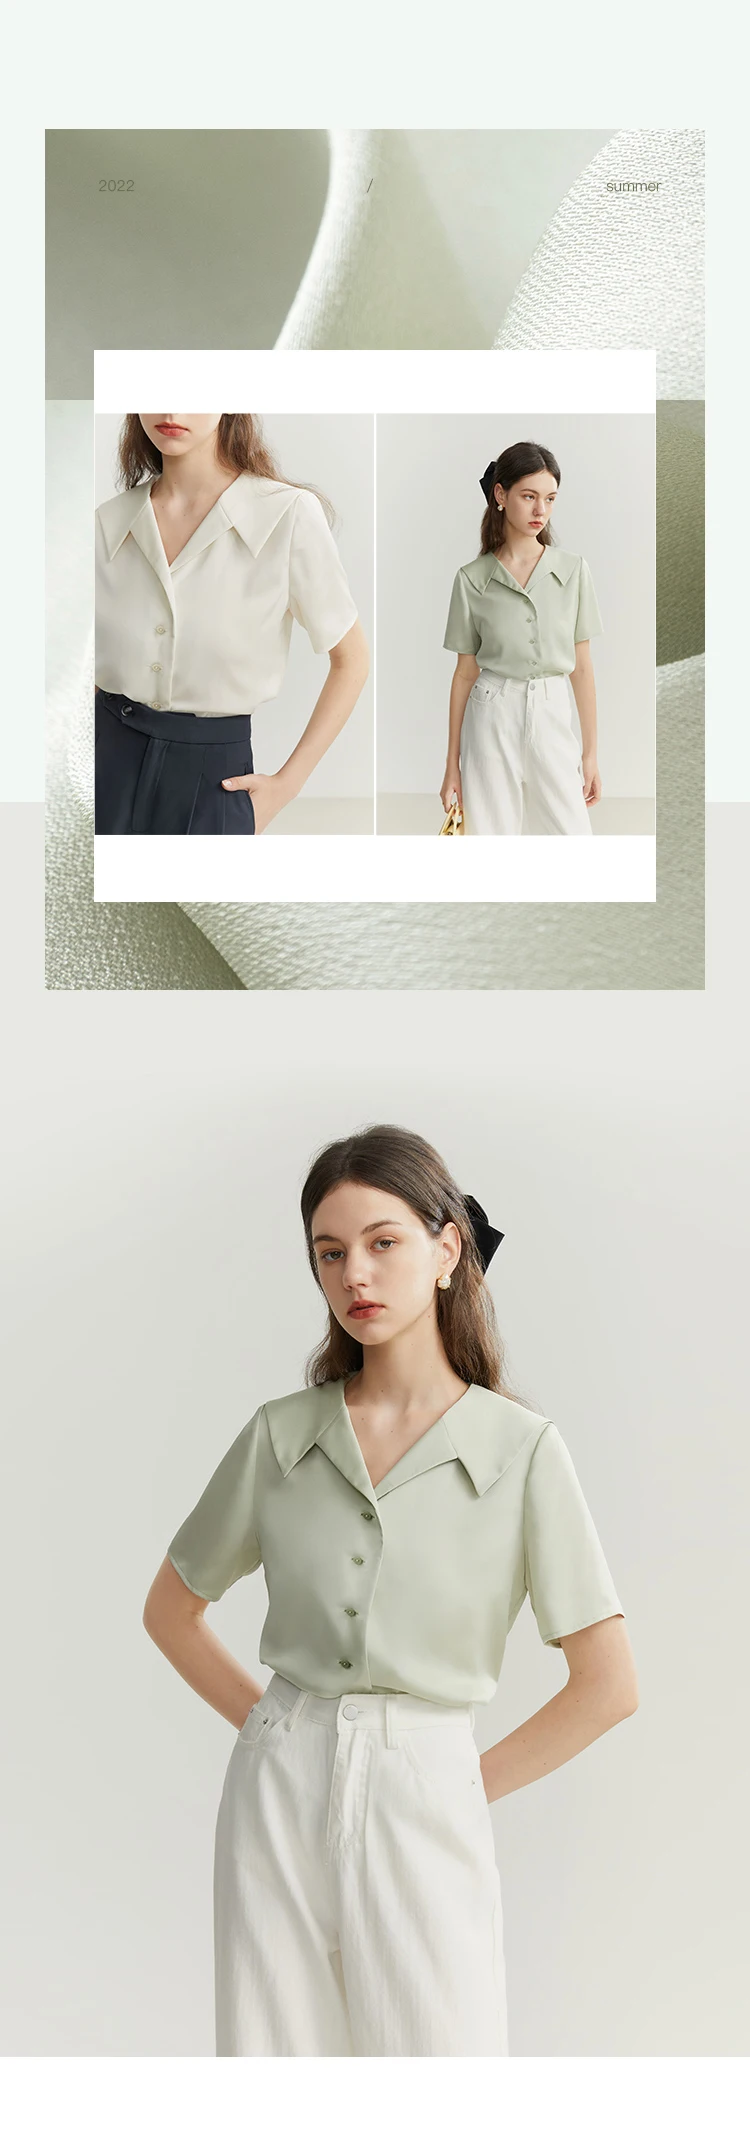 T-Shirt-Korean-Style-Slim-T-shirts-2022-Sexy-Tshirts-Cotton-Long-Sleeve-Summer-Tops-Tee.jpg_640x640.jpg